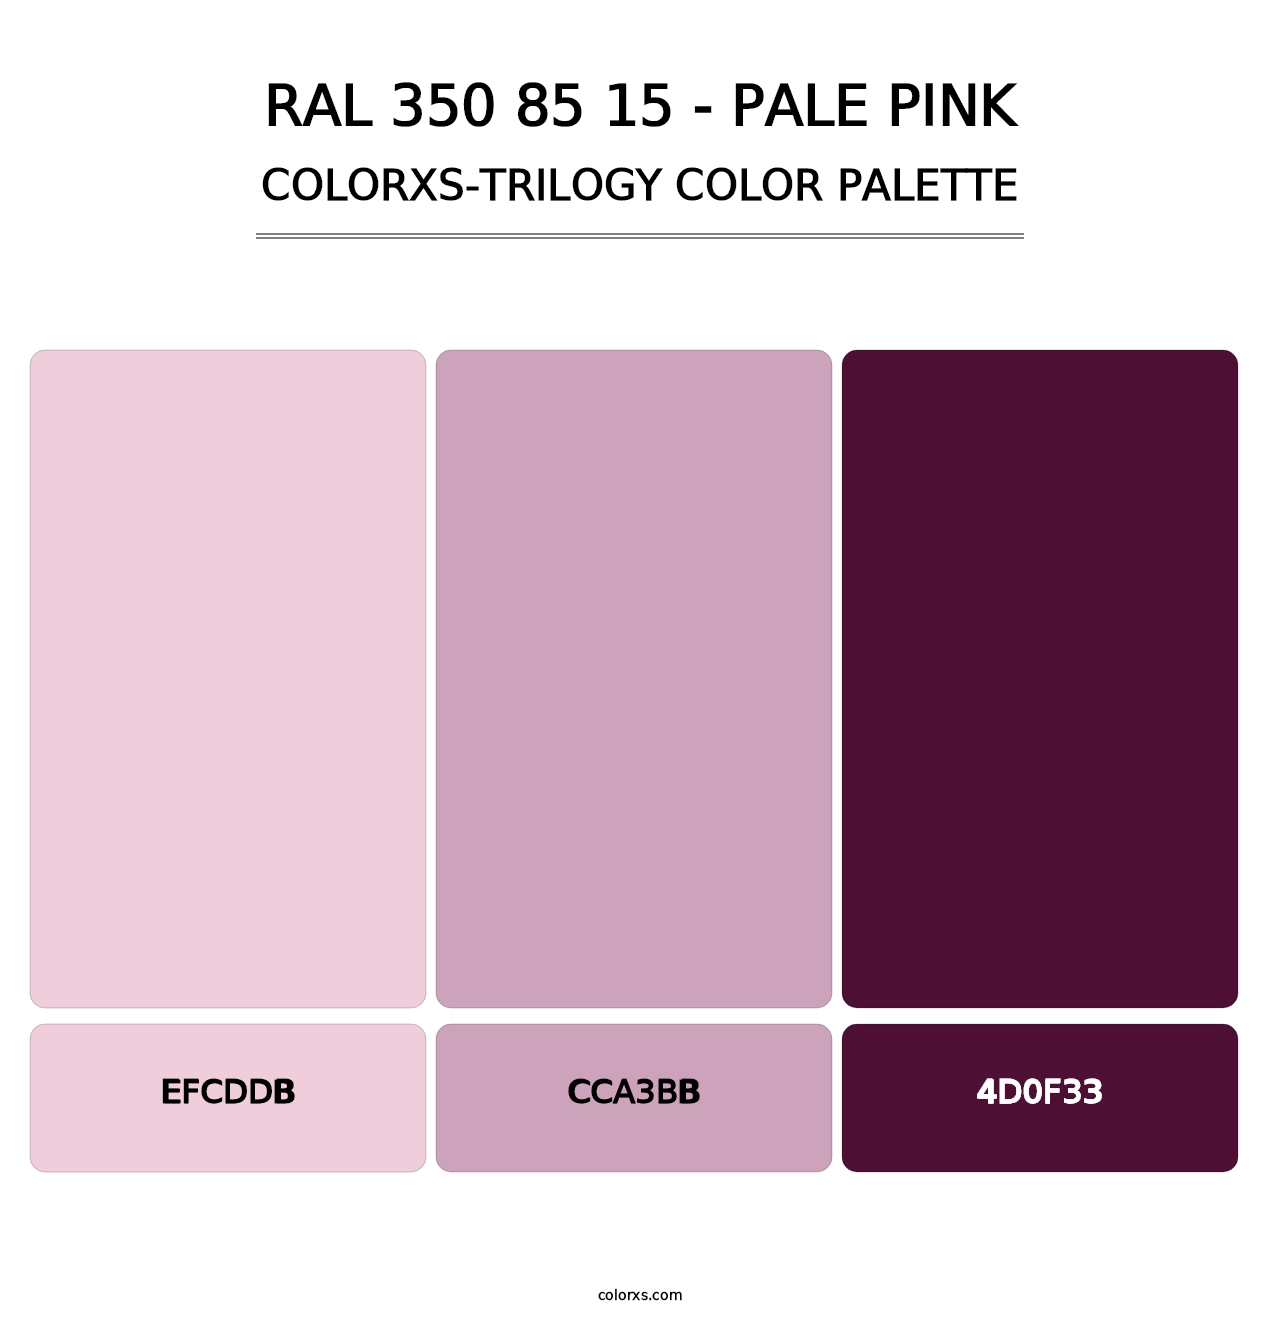 RAL 350 85 15 - Pale Pink - Colorxs Trilogy Palette